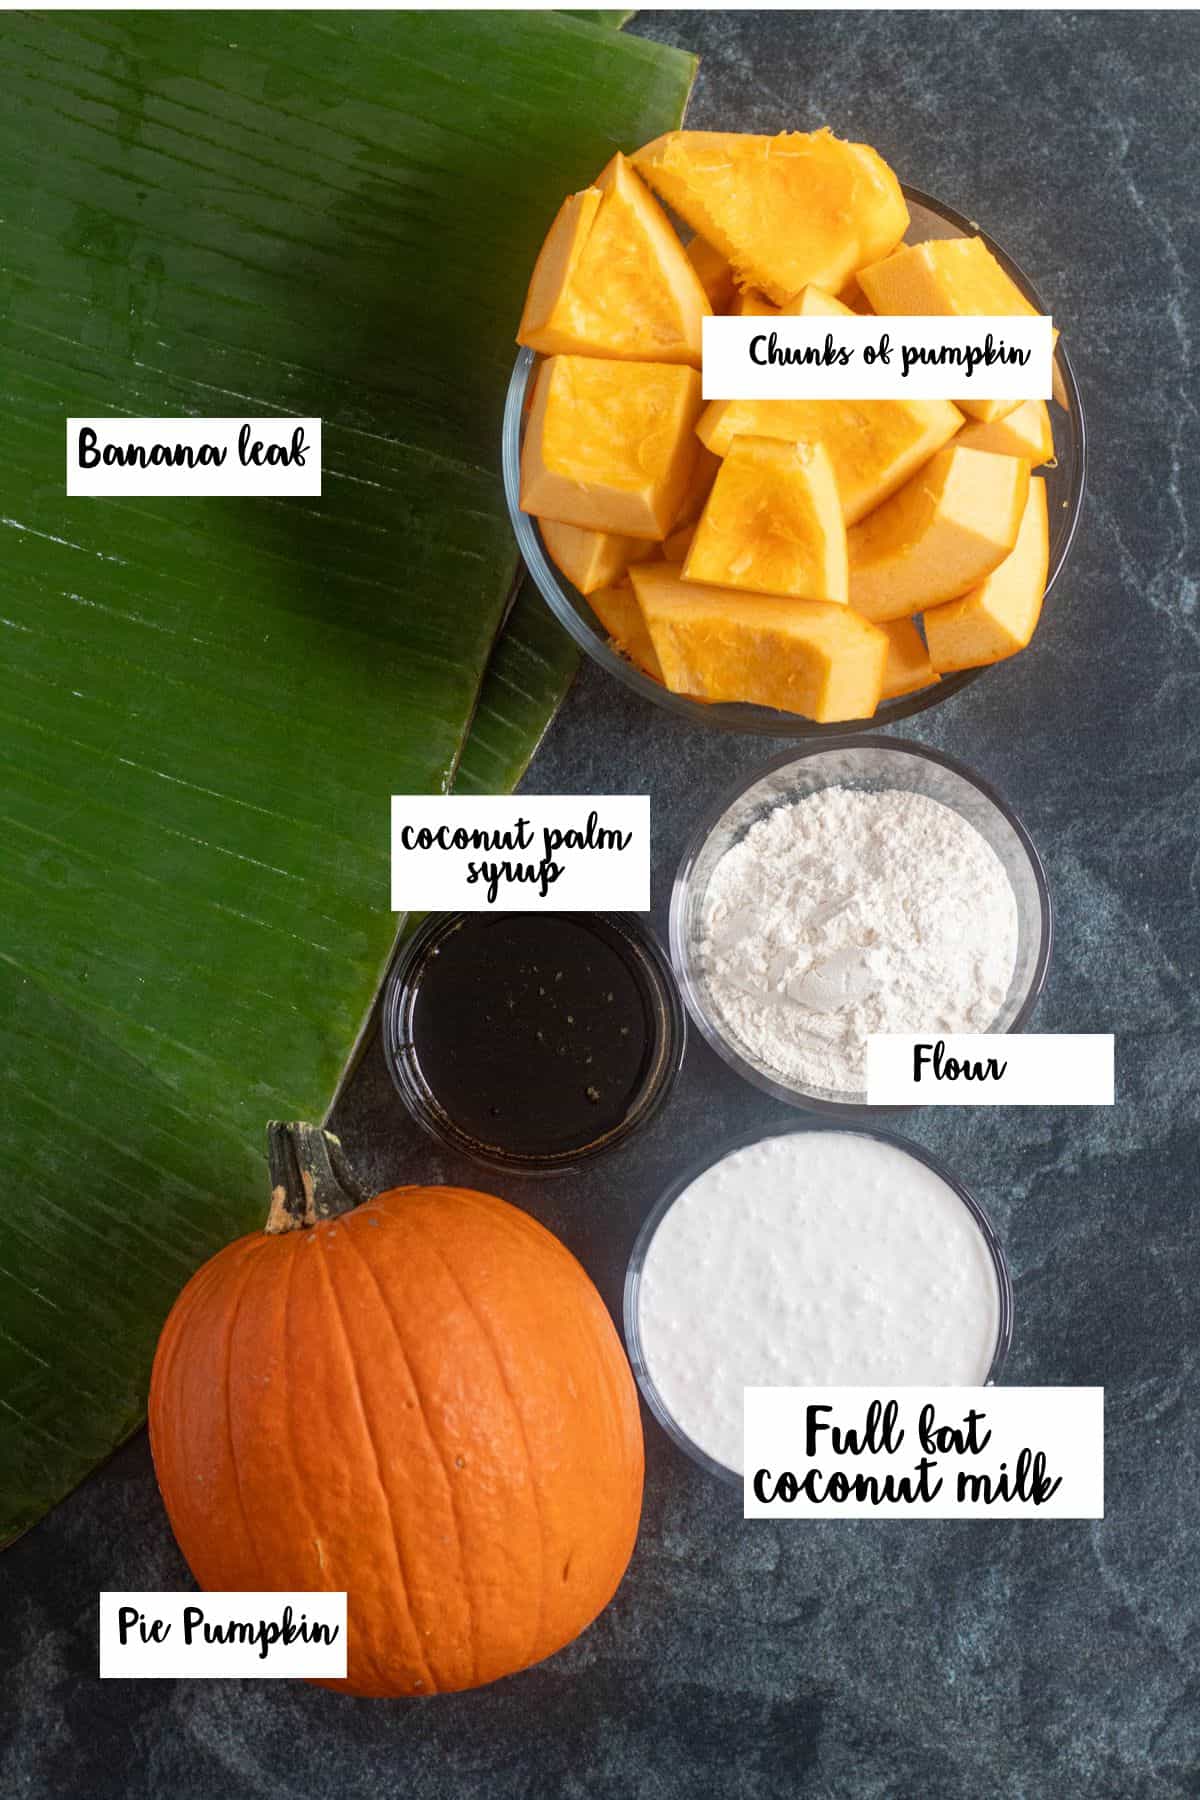 Ingredients shown are used to prepare Buatoro from Kiribati. 